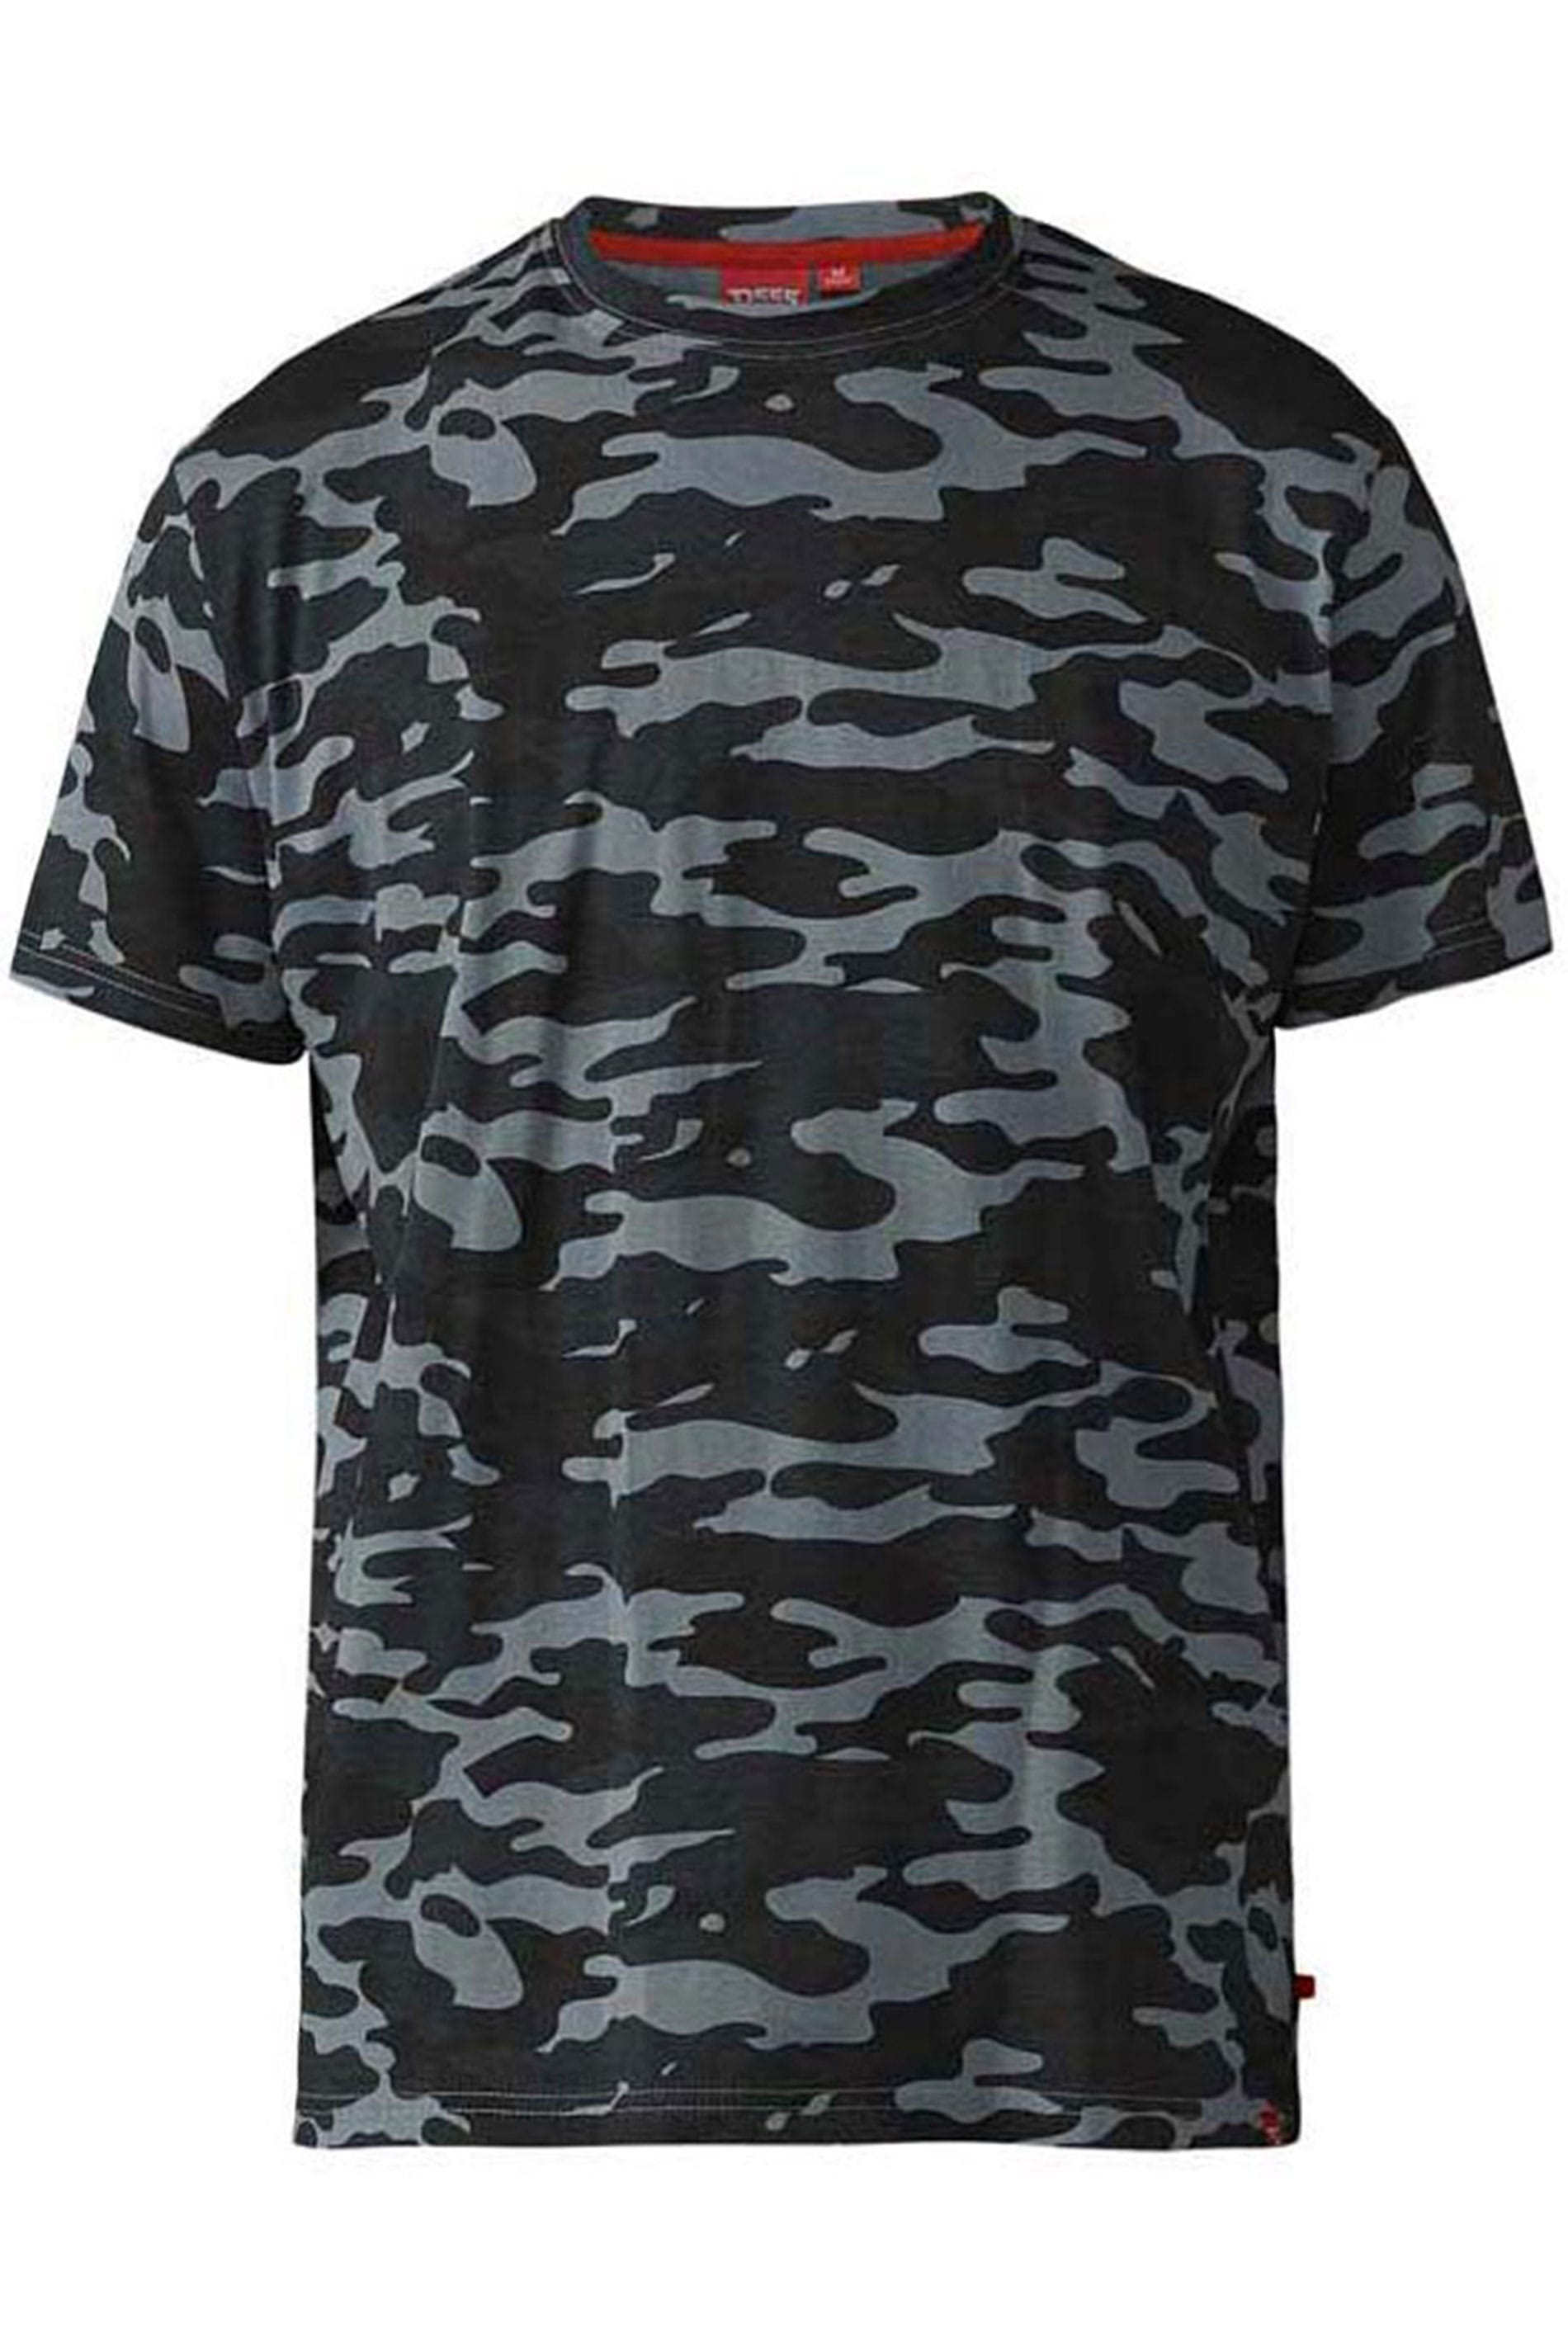 D555 Grey Camouflage Print T-Shirt 1